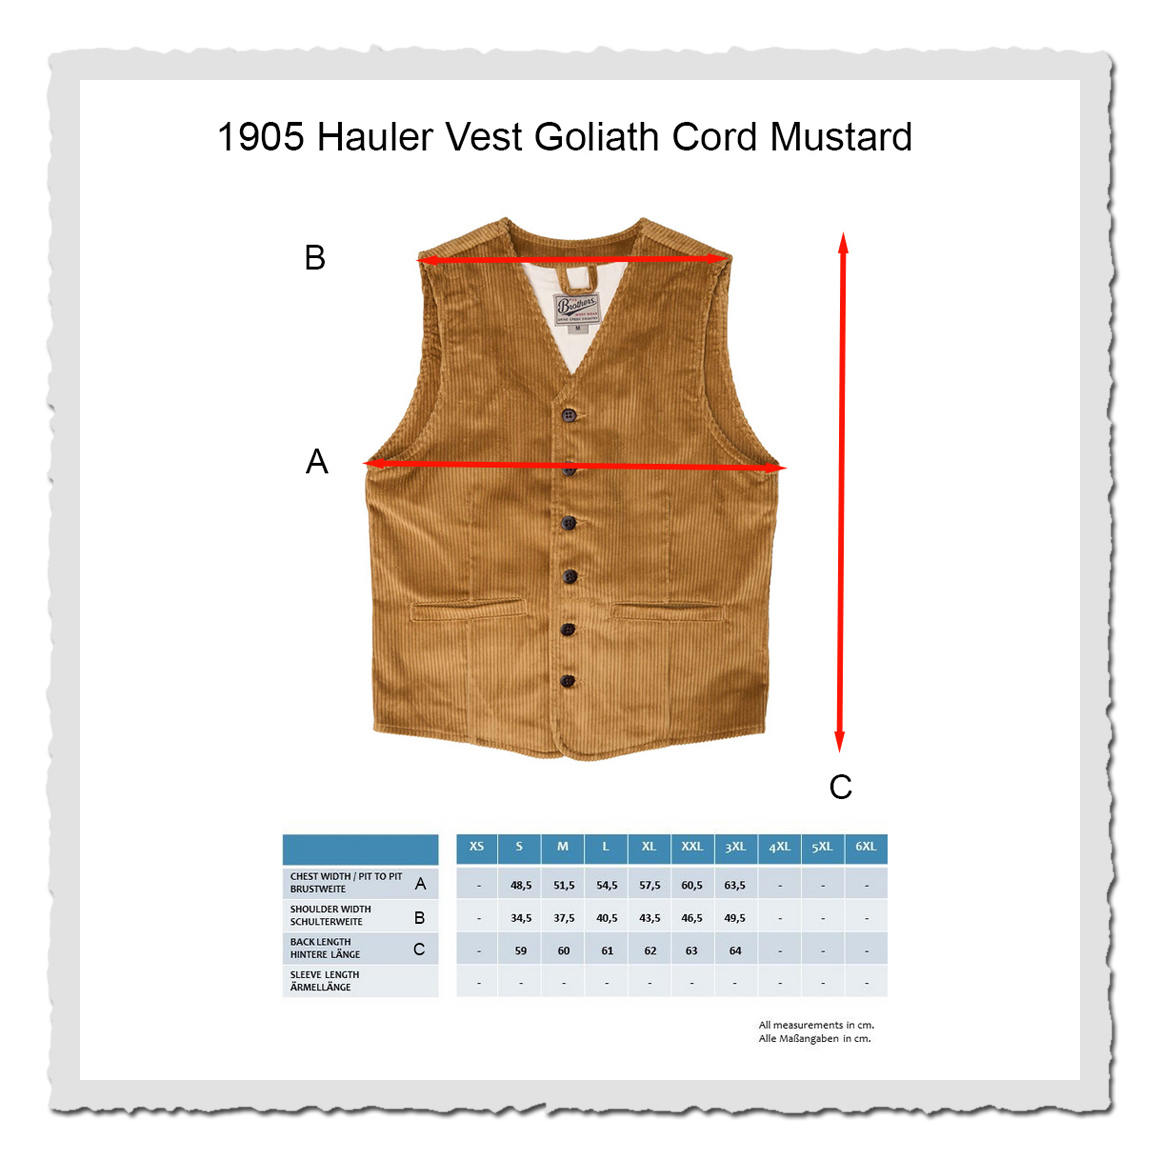 1905 Hauler Vest Goliath Cord Mustard